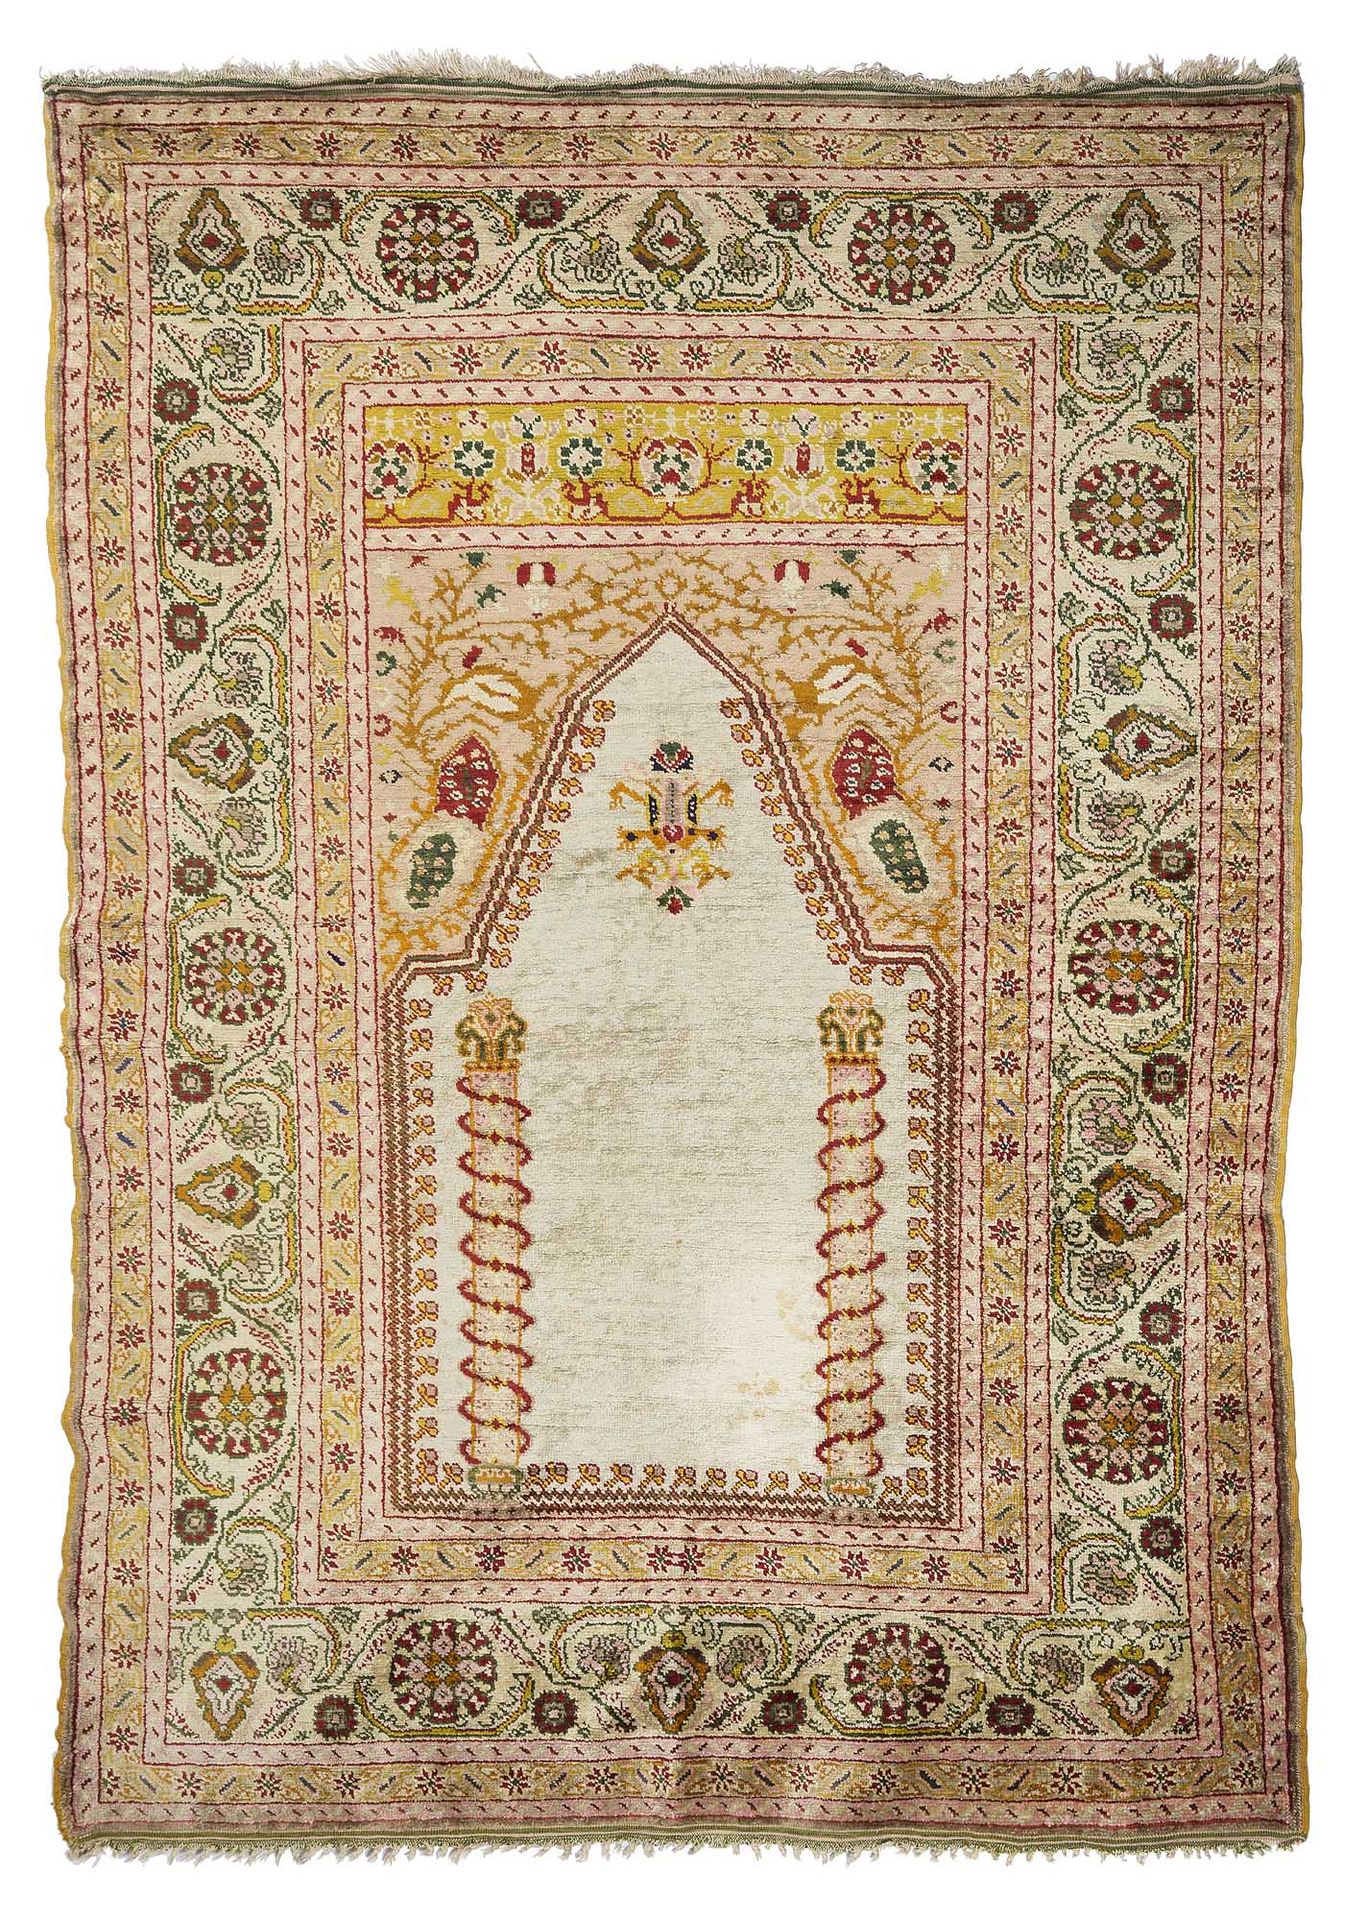 Null 丝绸KAYCÉRI地毯（小亚洲），20世纪初

尺寸：155 x 115厘米

技术特点：丝绸基础上的丝绒。

象牙色的场地上有一个箭头，突出的是康乃&hellip;